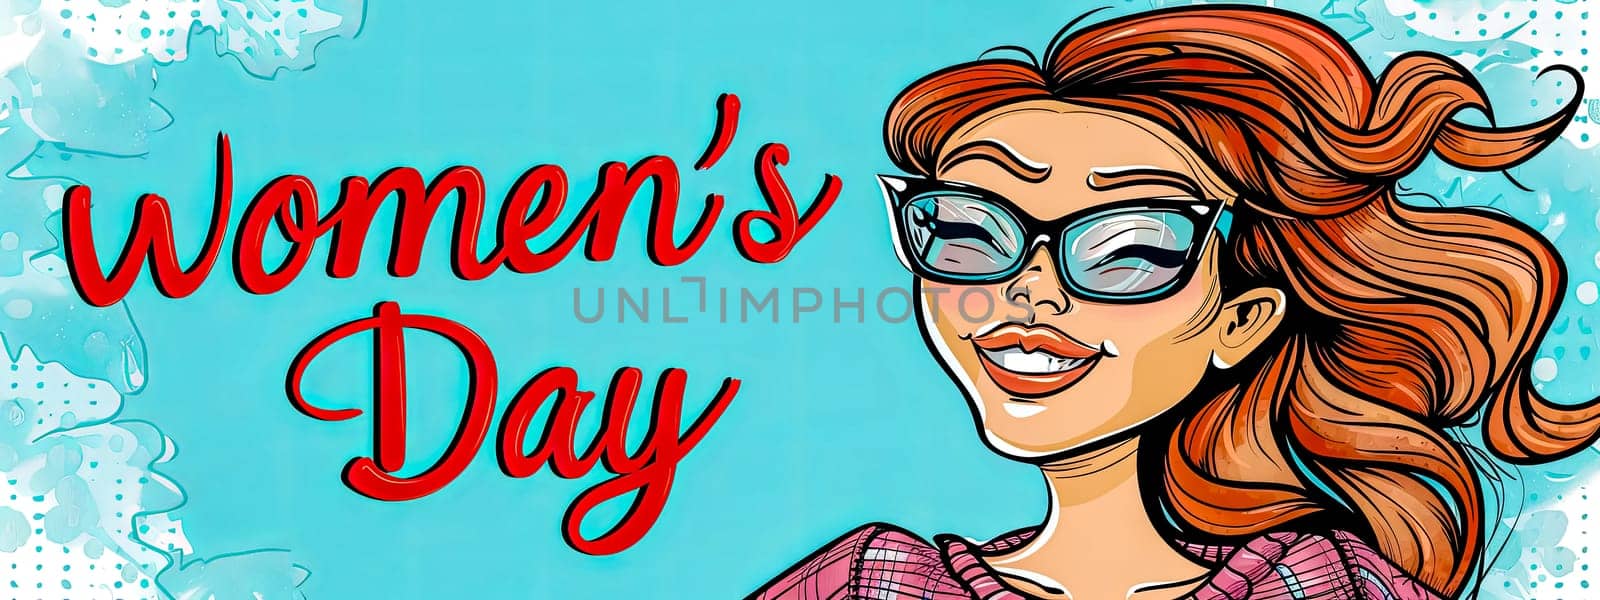 Colorful illustration of a stylish woman celebrating international women's day